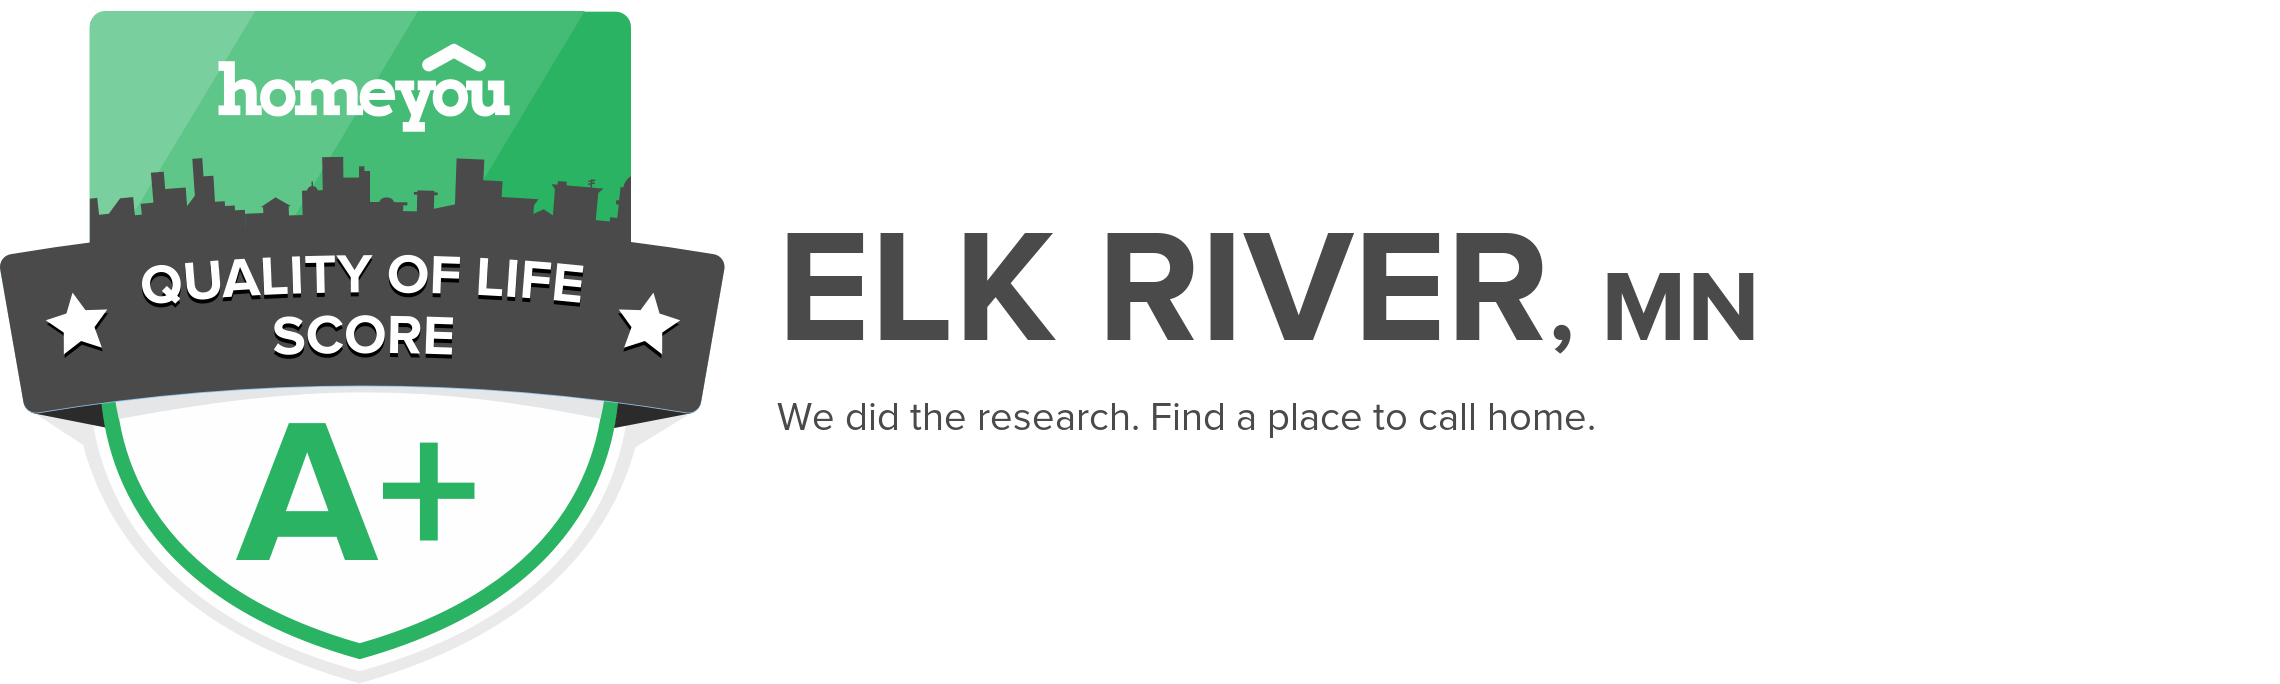 Elk River, MN